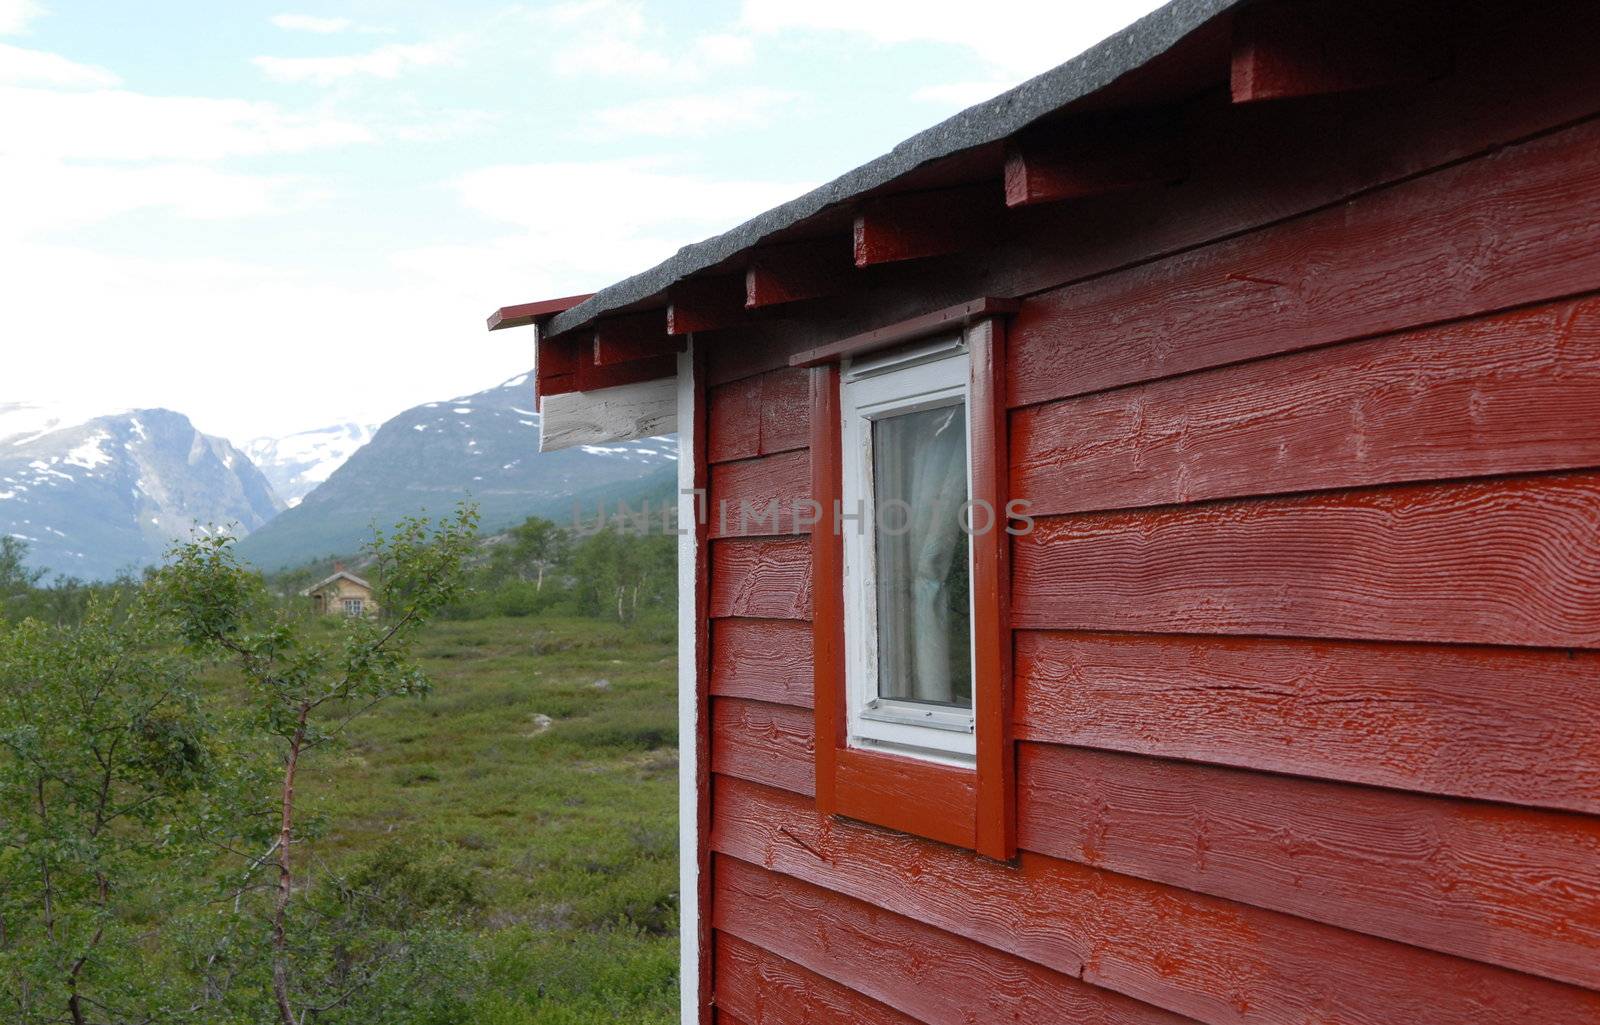 Small red cabin in Norwegian mountain